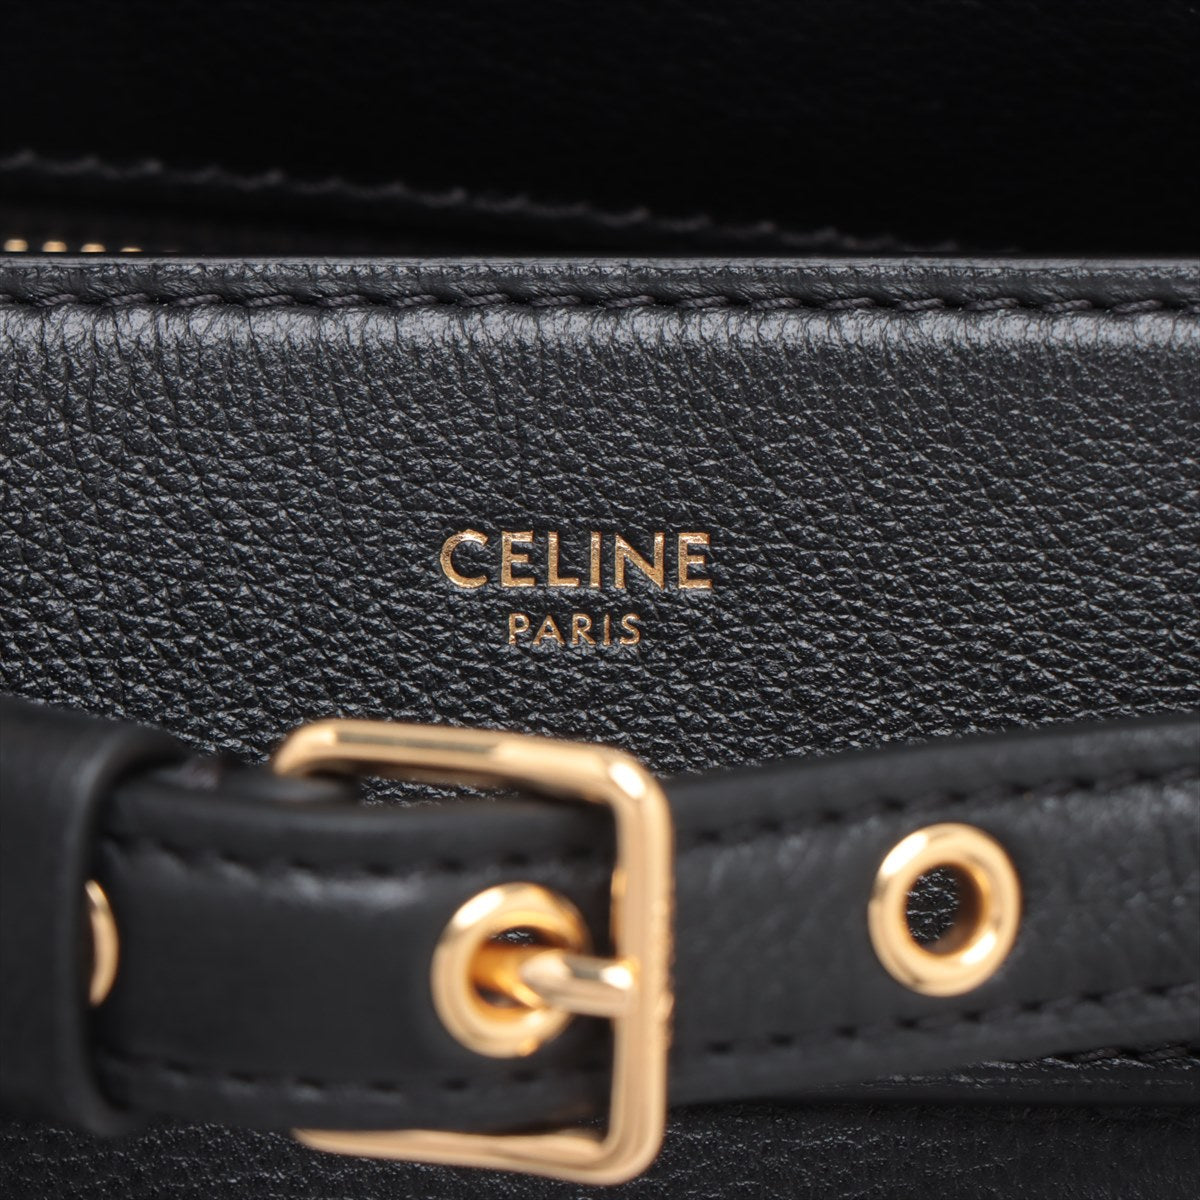 Celine County Leather Tote Bag Black